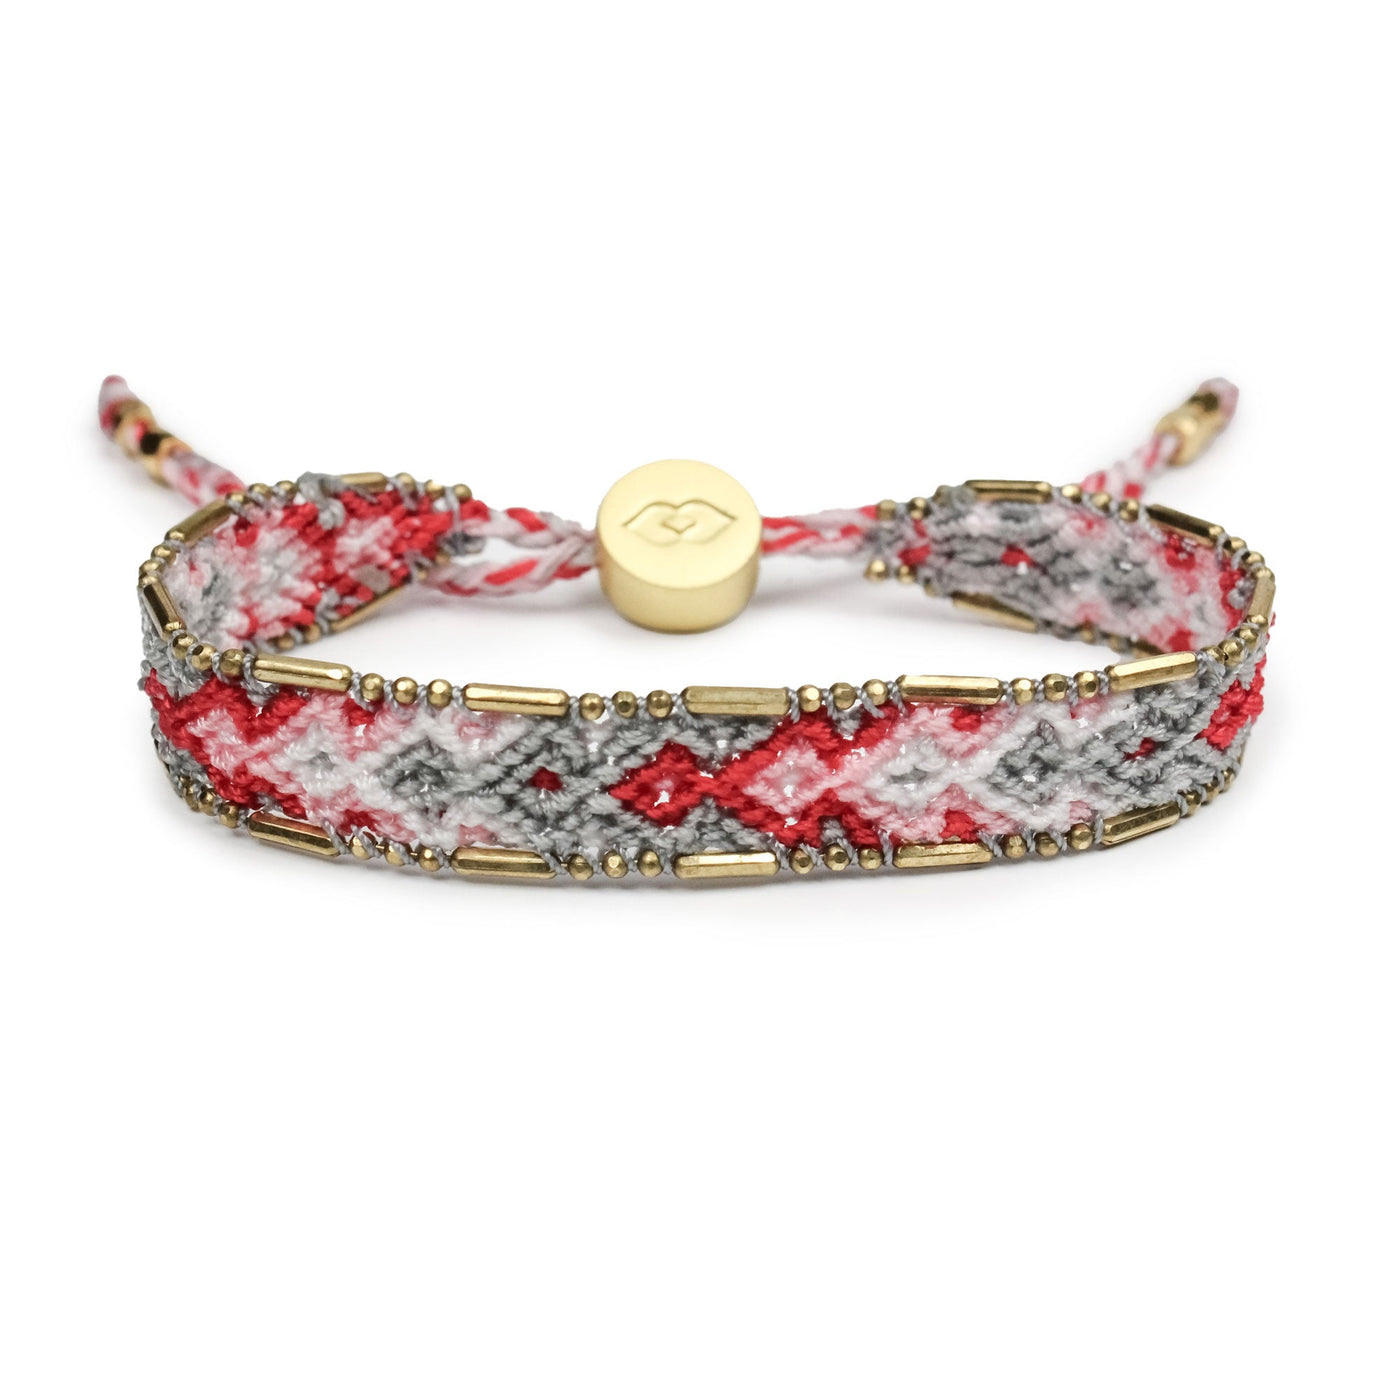 Bali Friendship Bracelet - Ruby Quartz